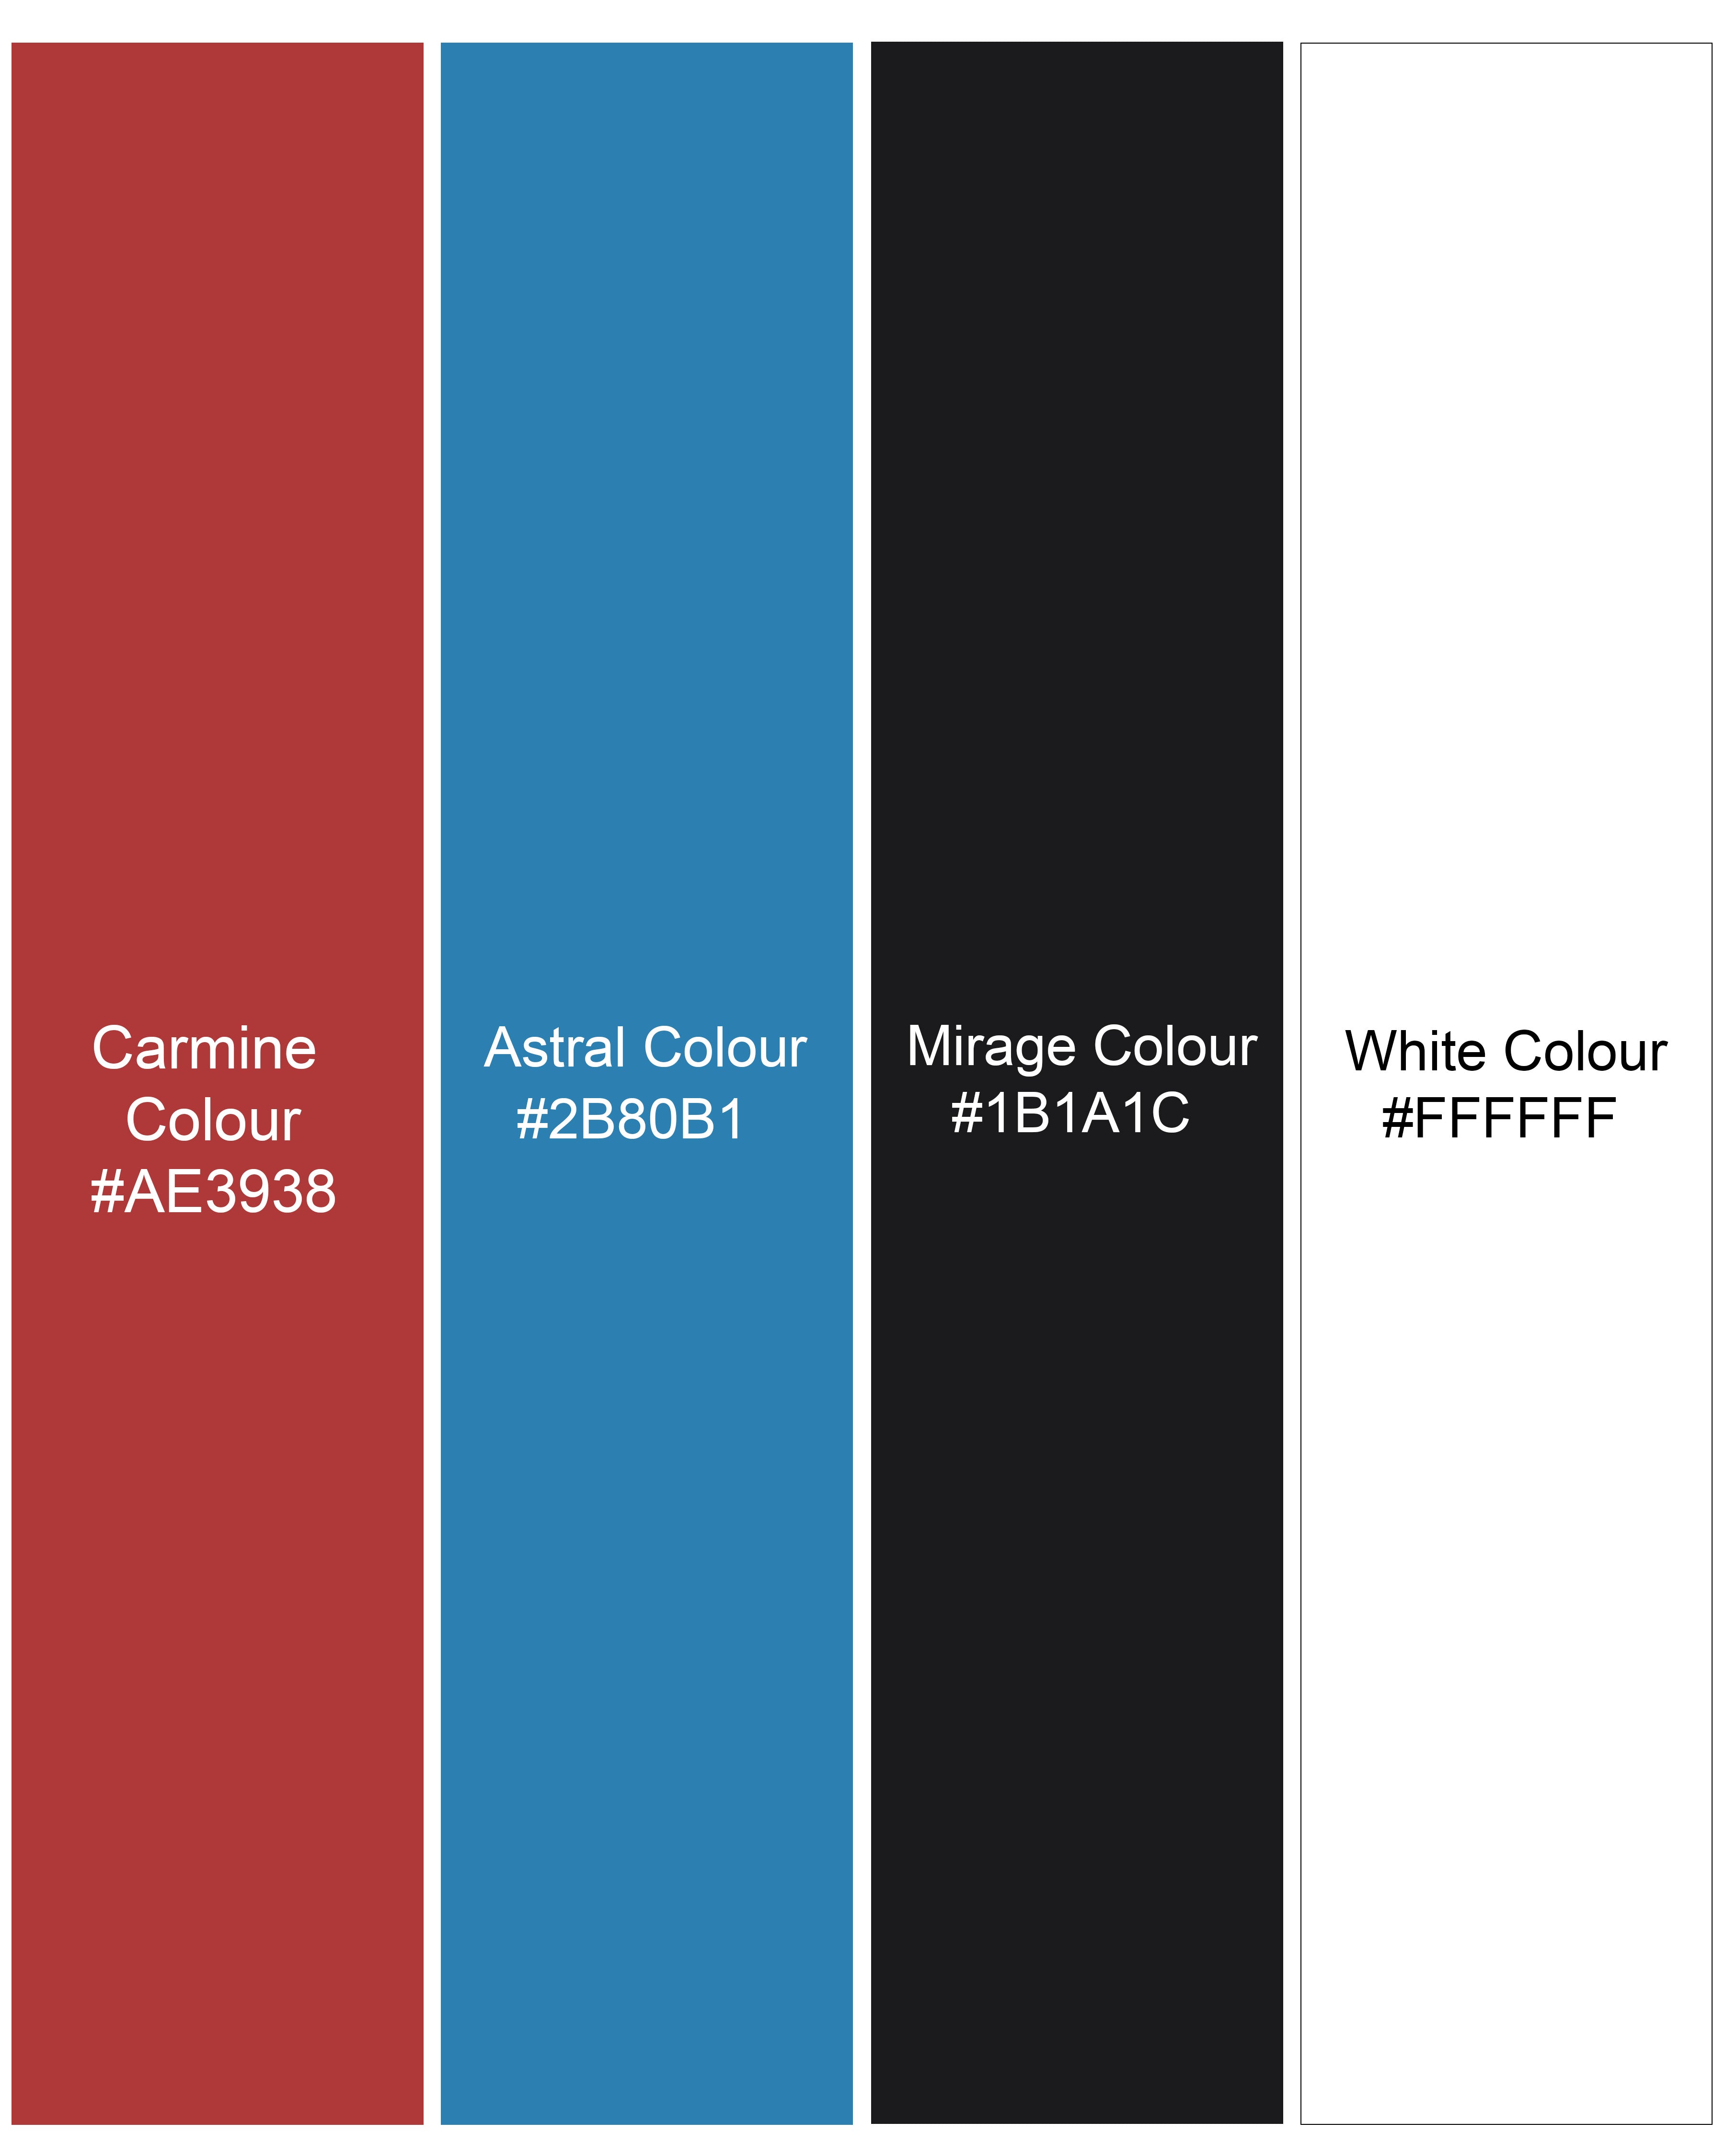 Carmine Red with White Multicolour Bohemian Printed Super Soft Premium Cotton Shirt 9254-38,9254-H-38,9254-39,9254-H-39,9254-40,9254-H-40,9254-42,9254-H-42,9254-44,9254-H-44,9254-46,9254-H-46,9254-48,9254-H-48,9254-50,9254-H-50,9254-52,9254-H-52